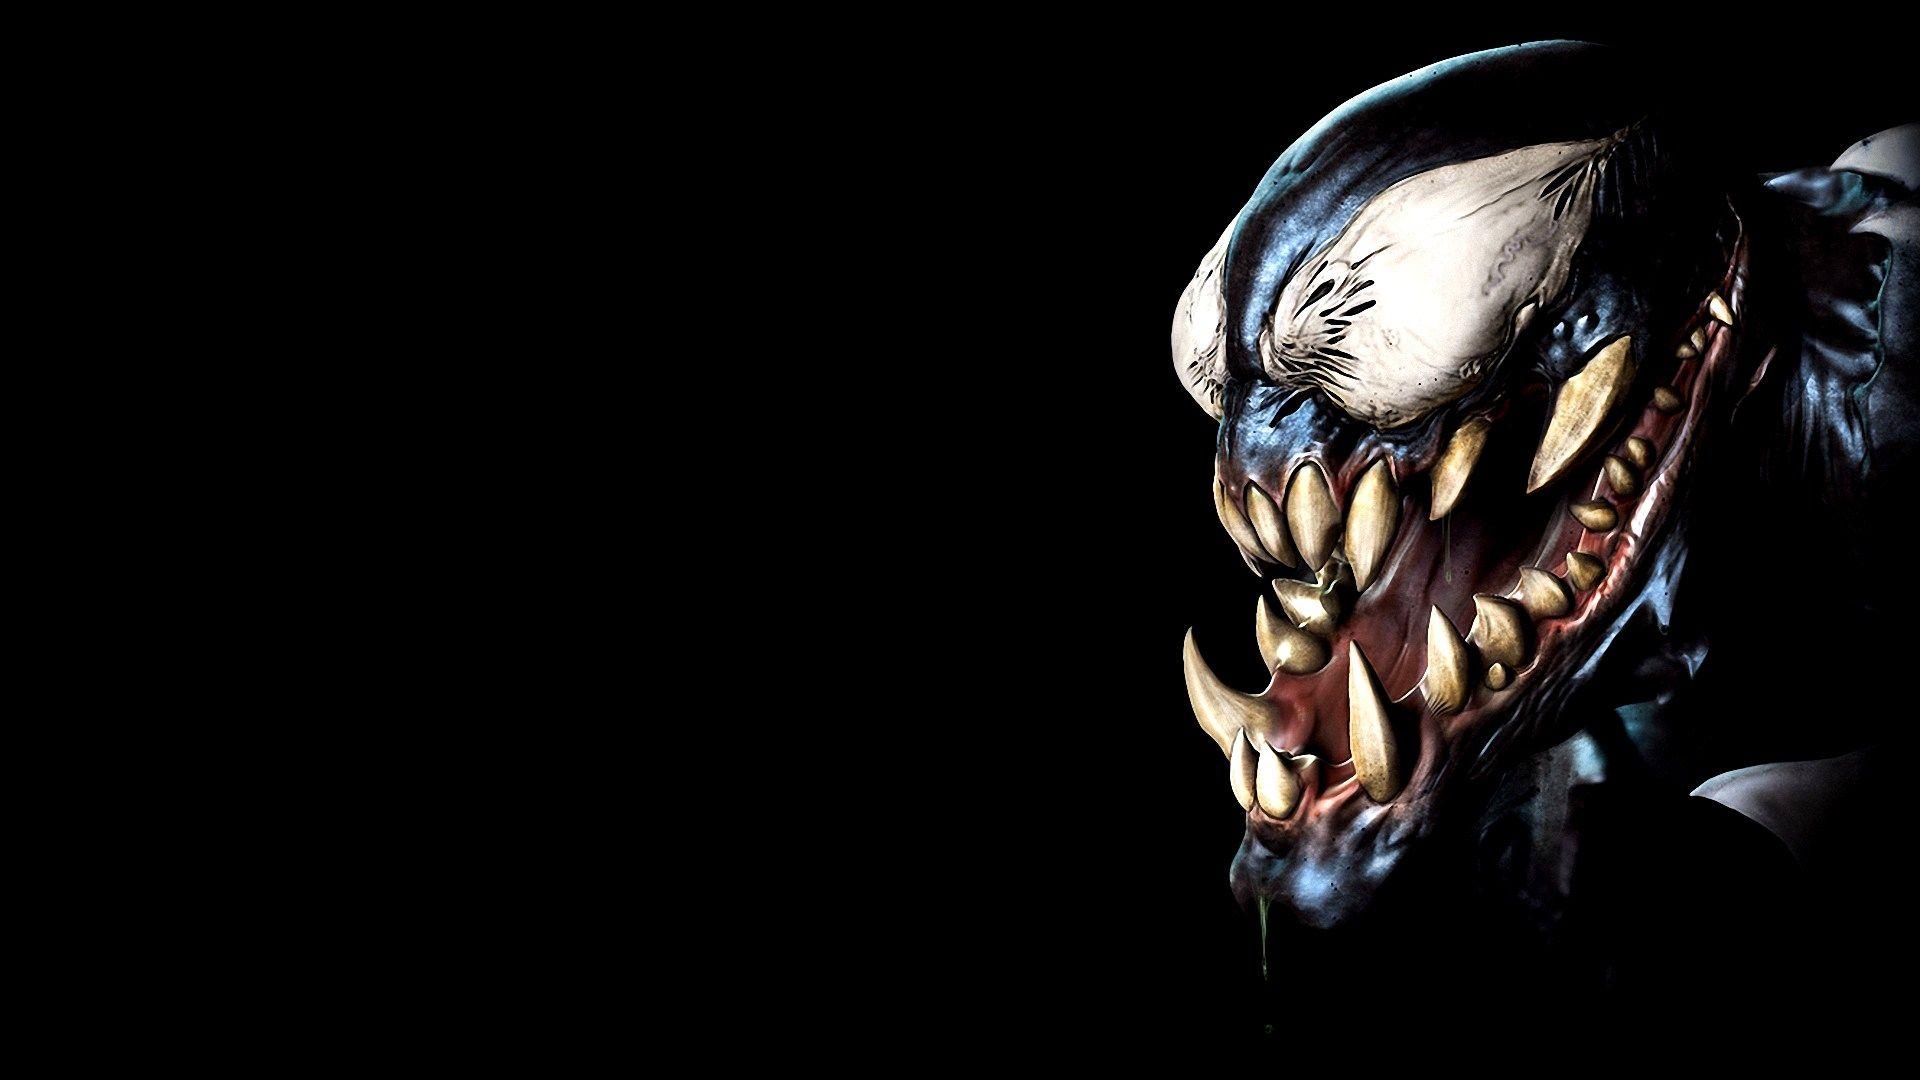 Venom Wallpaper. Marvel: Evil Villain Or Anti Hero